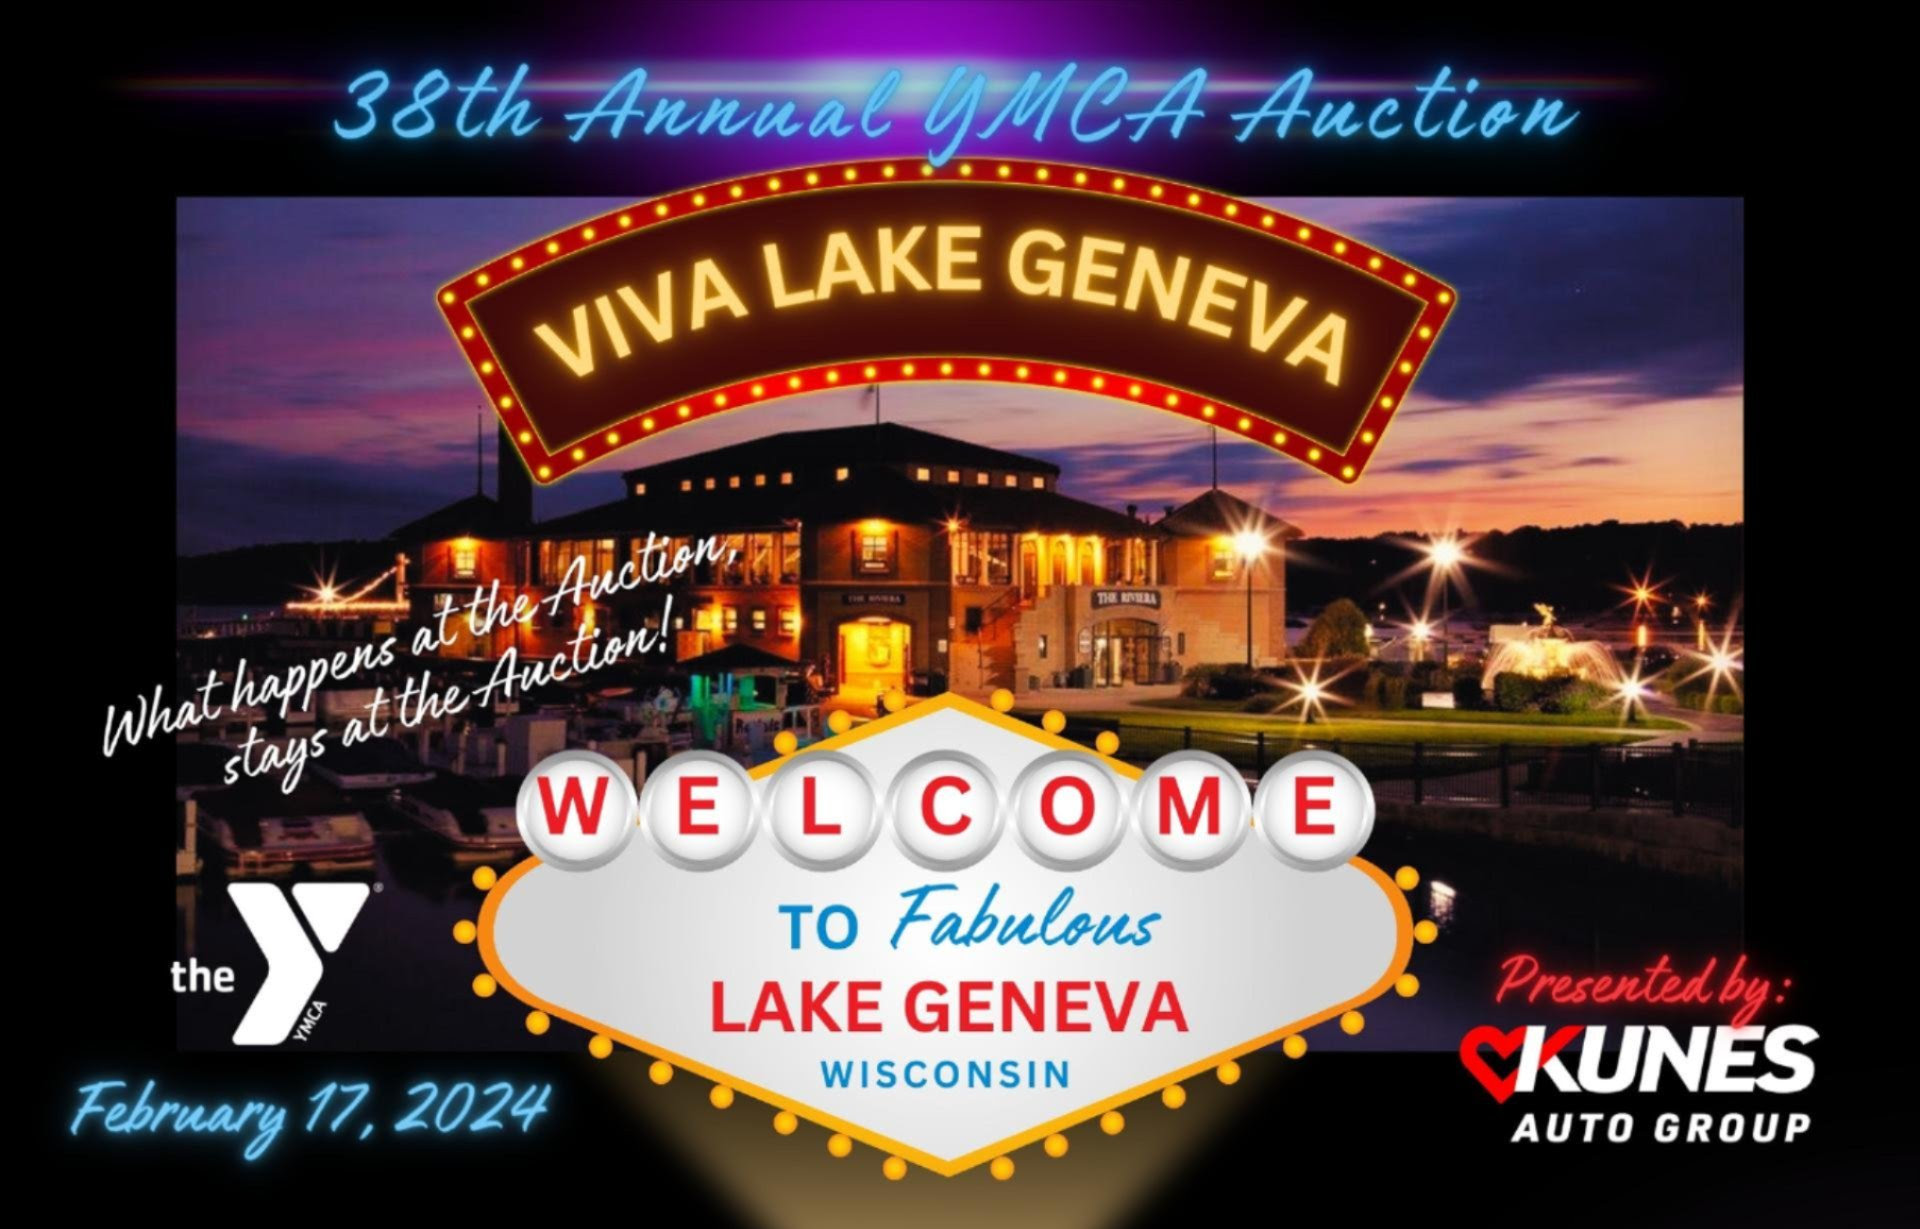 Text: 38th Annual YMCA Auction; Viva Lake Geneva; What happens at the Auction, stays at the Auction!; Welcome to Fabulous Lake Geneva Wisconsin; The YMCA; February 17, 2024; Presented by Kunes Auto Group
Photo: Lake Geneva's Riviera lit up while the sun sets at dusk